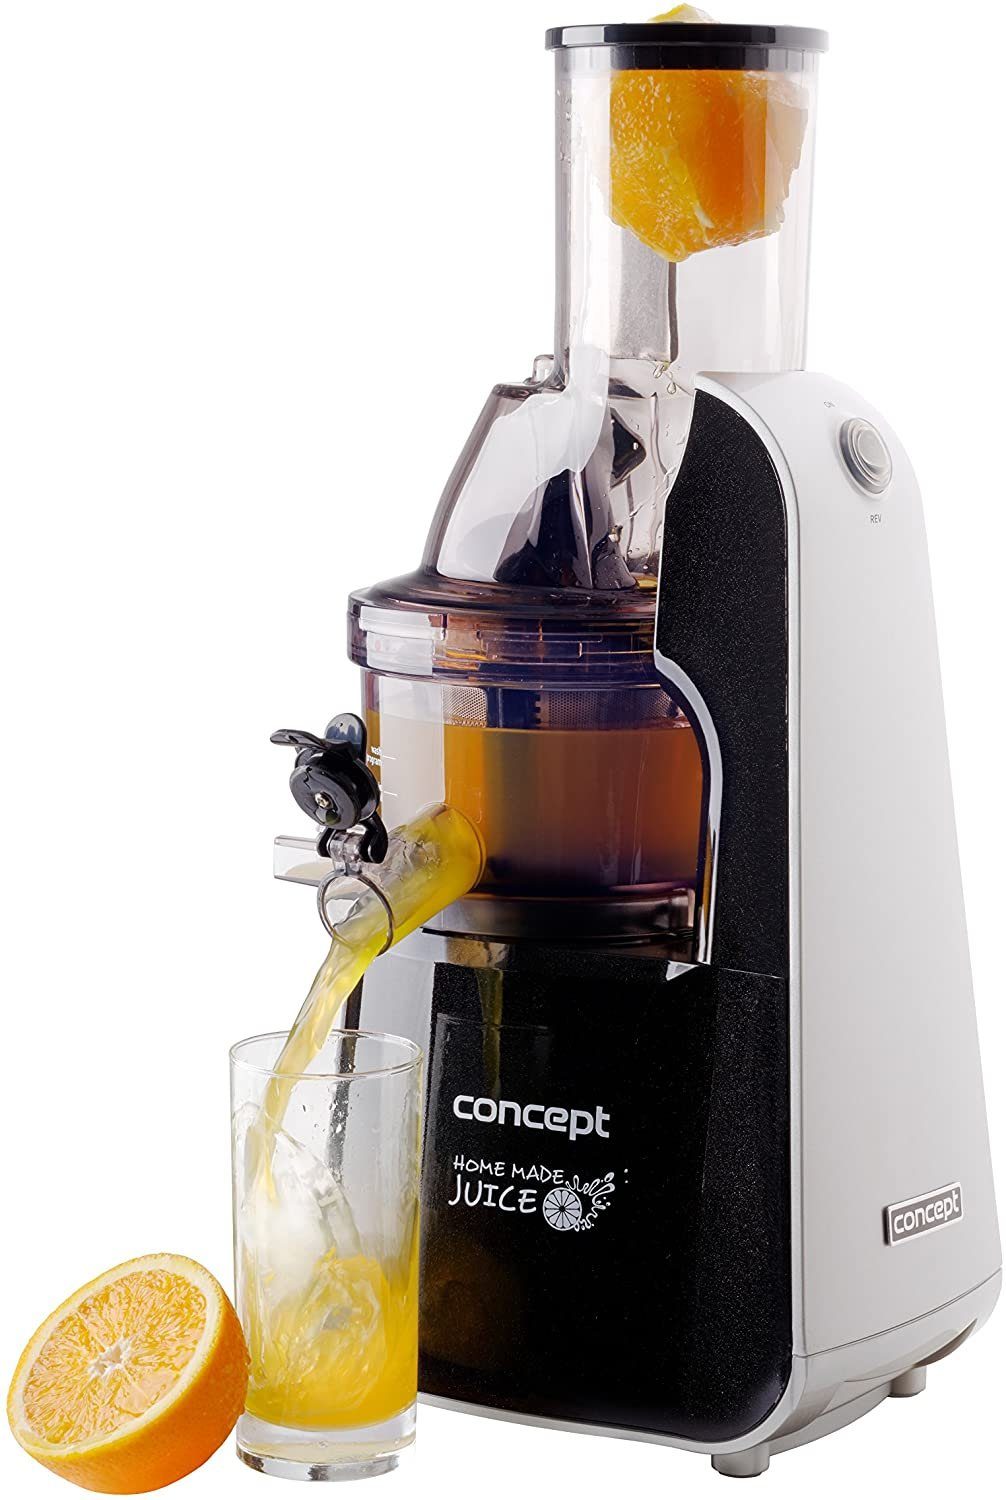 Concept Entsafter LO-7067 Home Made Juice Entsafter schnecken online kaufen  | OTTO